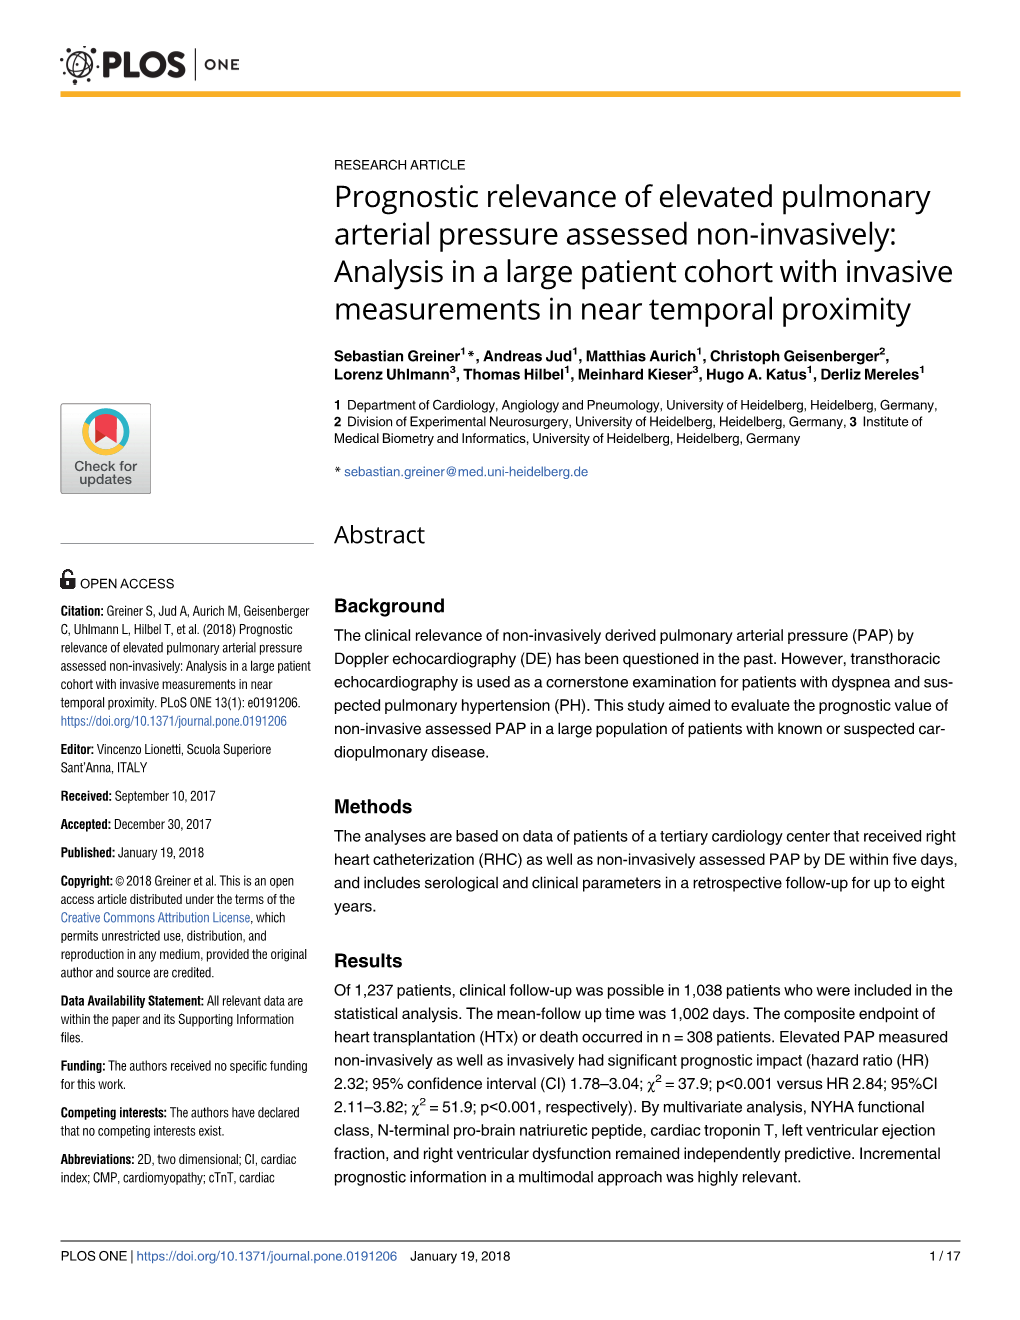 Prognostic Relevance of Elevated Pulmonary Arterial Pressure